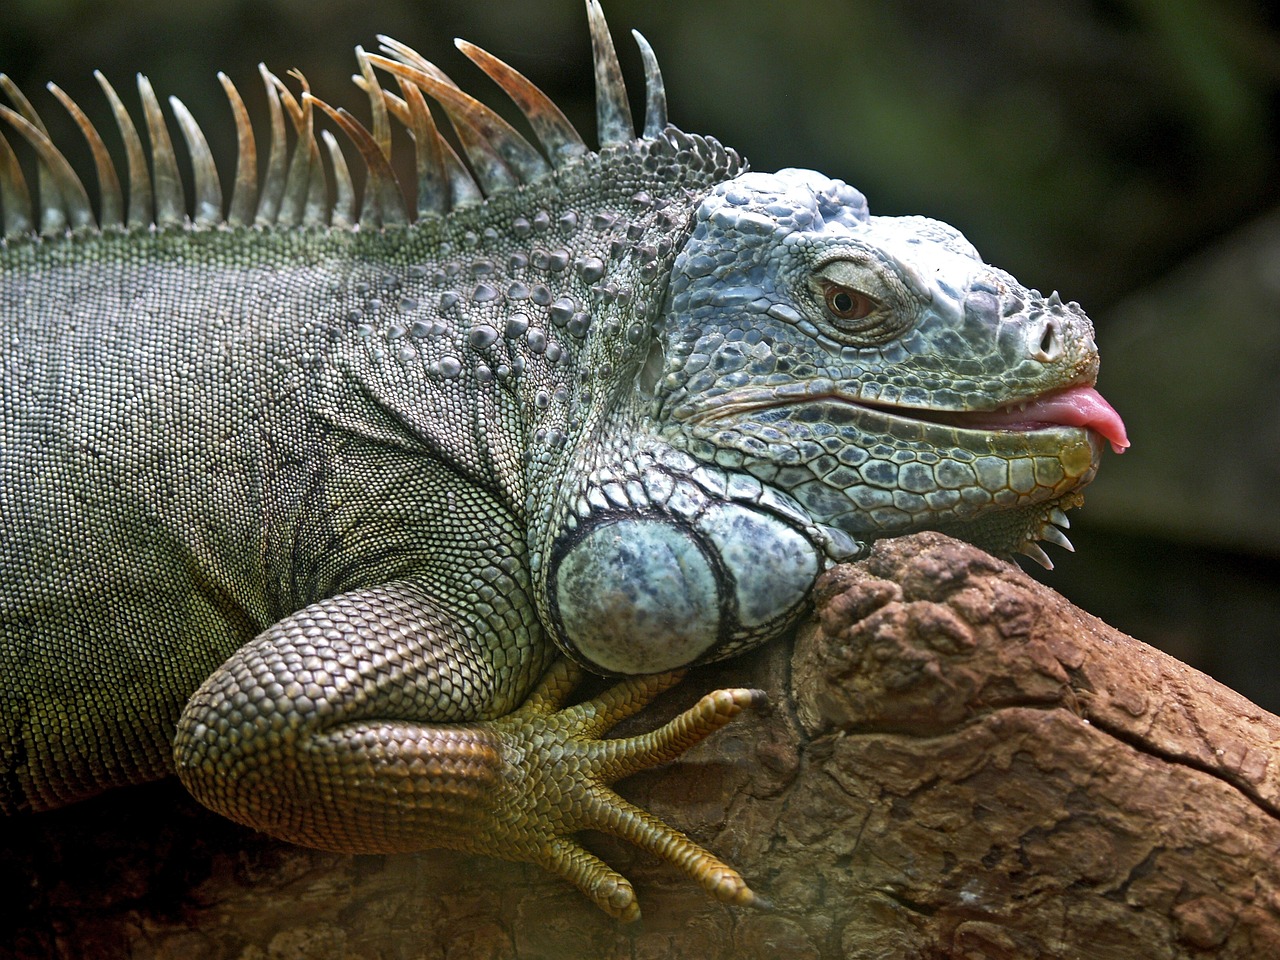 a close up of a lizard on a rock, by Robert Brackman, sumatraism, iguana, drooling, version 3, pet animal